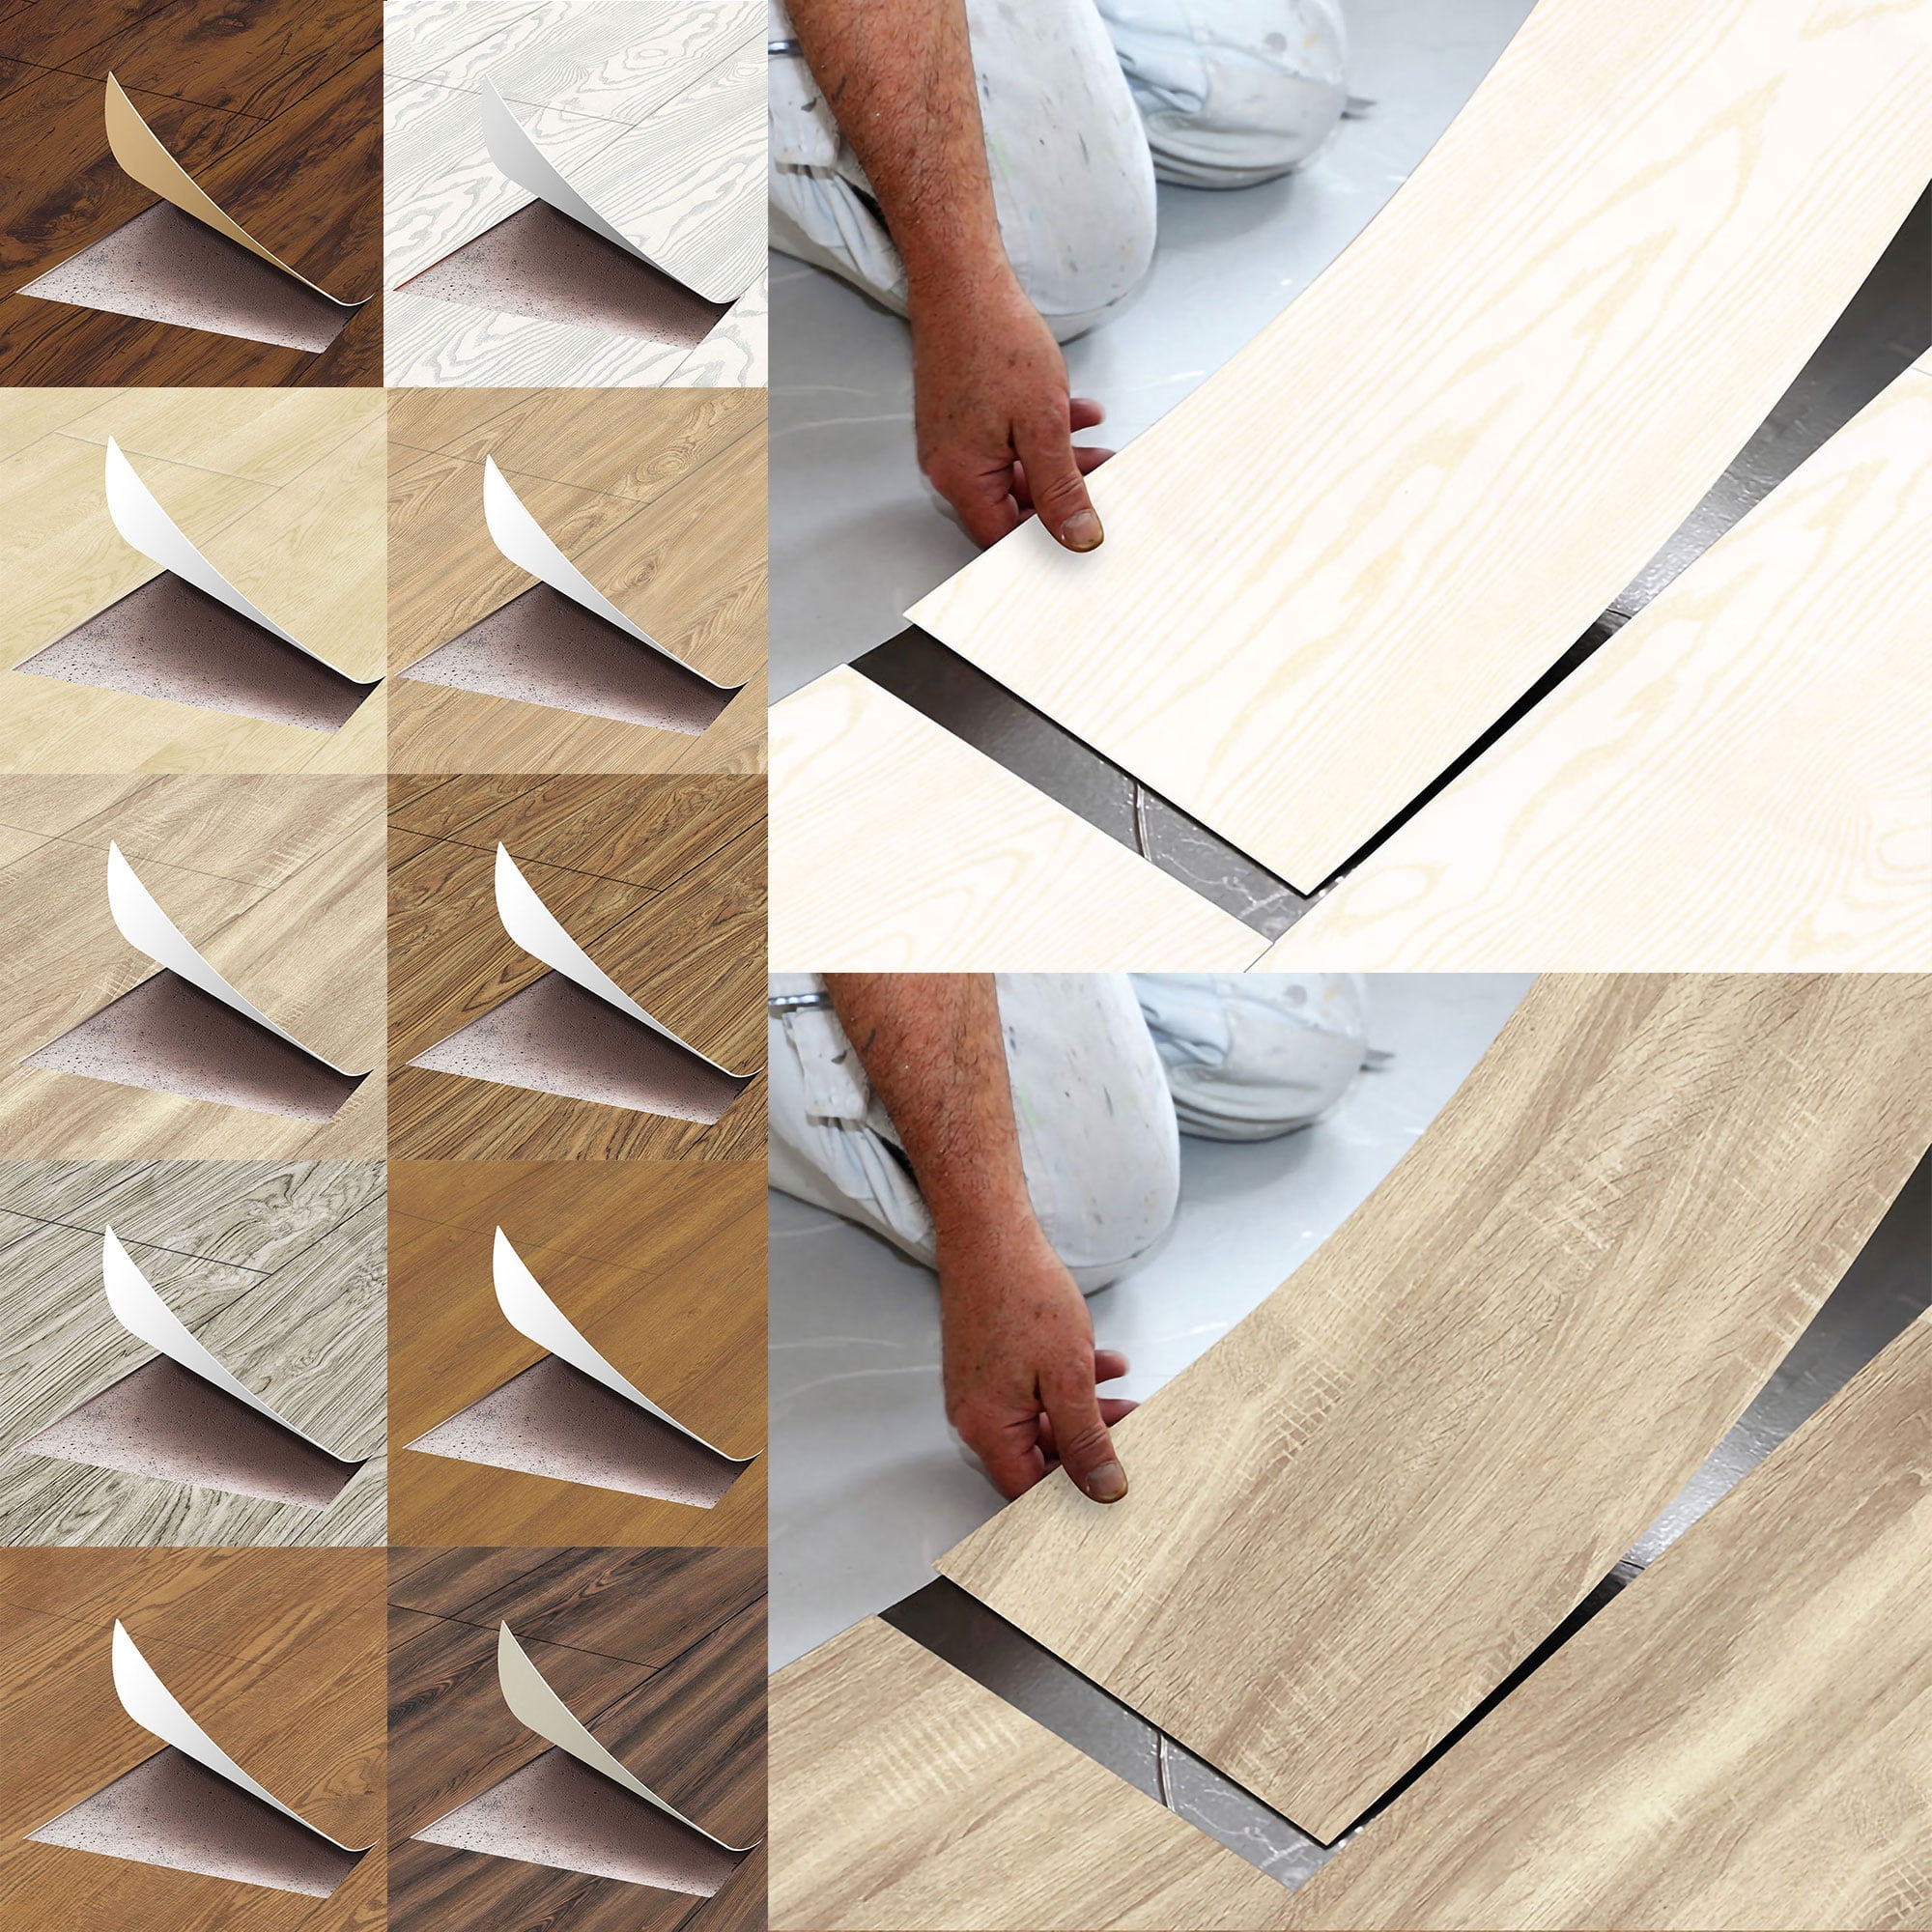 118 X7 87 Self Adhesive Vinyl Floor, How To Prep Floor For Self Adhesive Tile